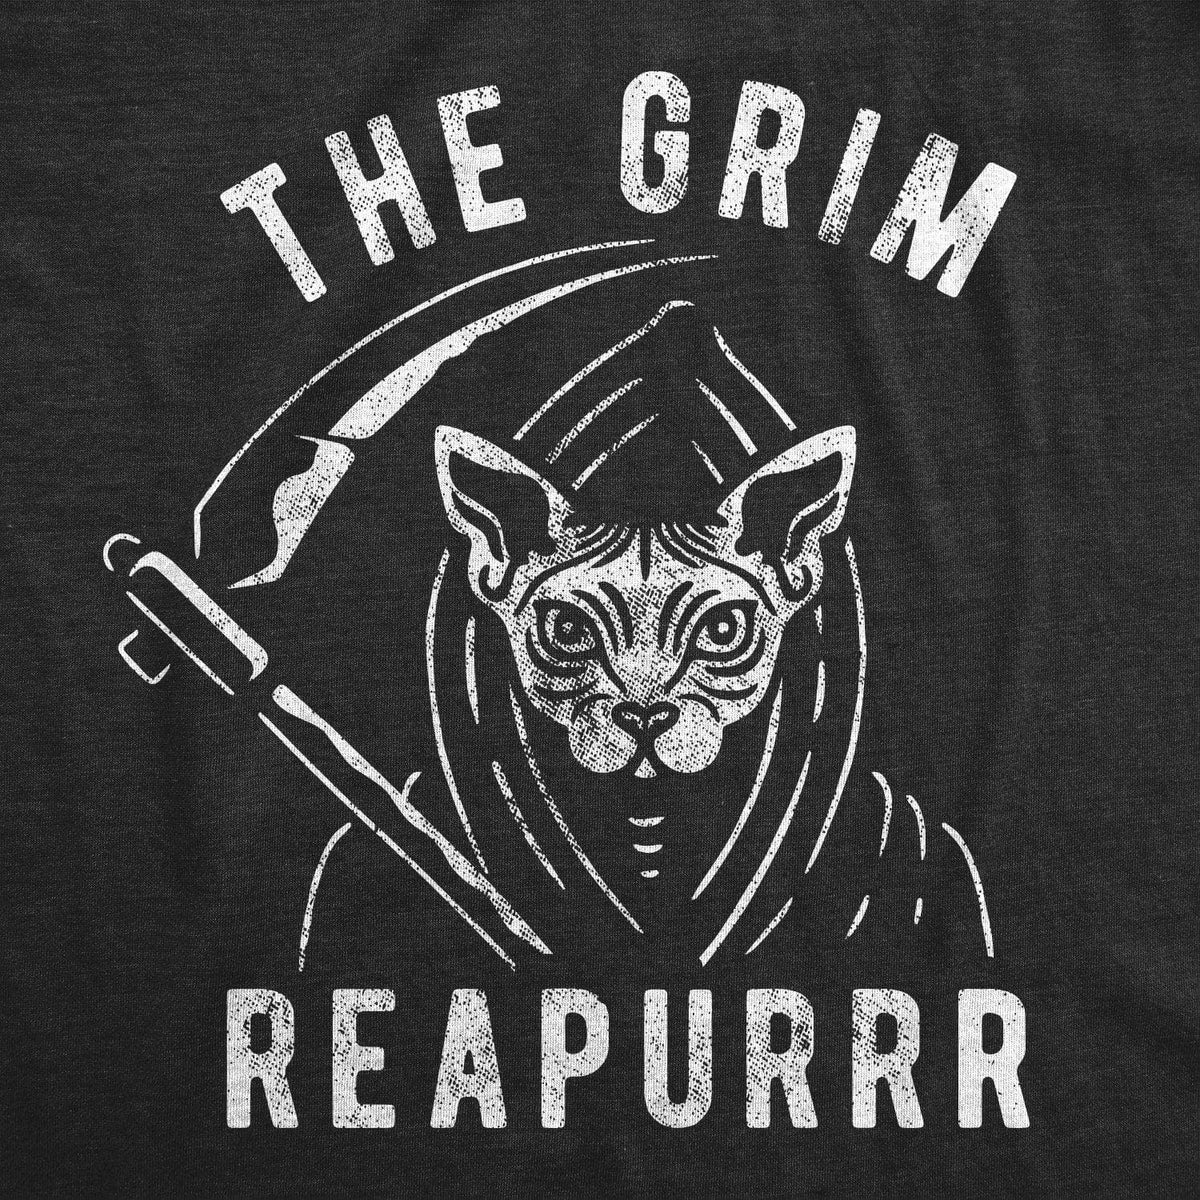 Grim Reapurrr Men&#39;s Tshirt - Crazy Dog T-Shirts